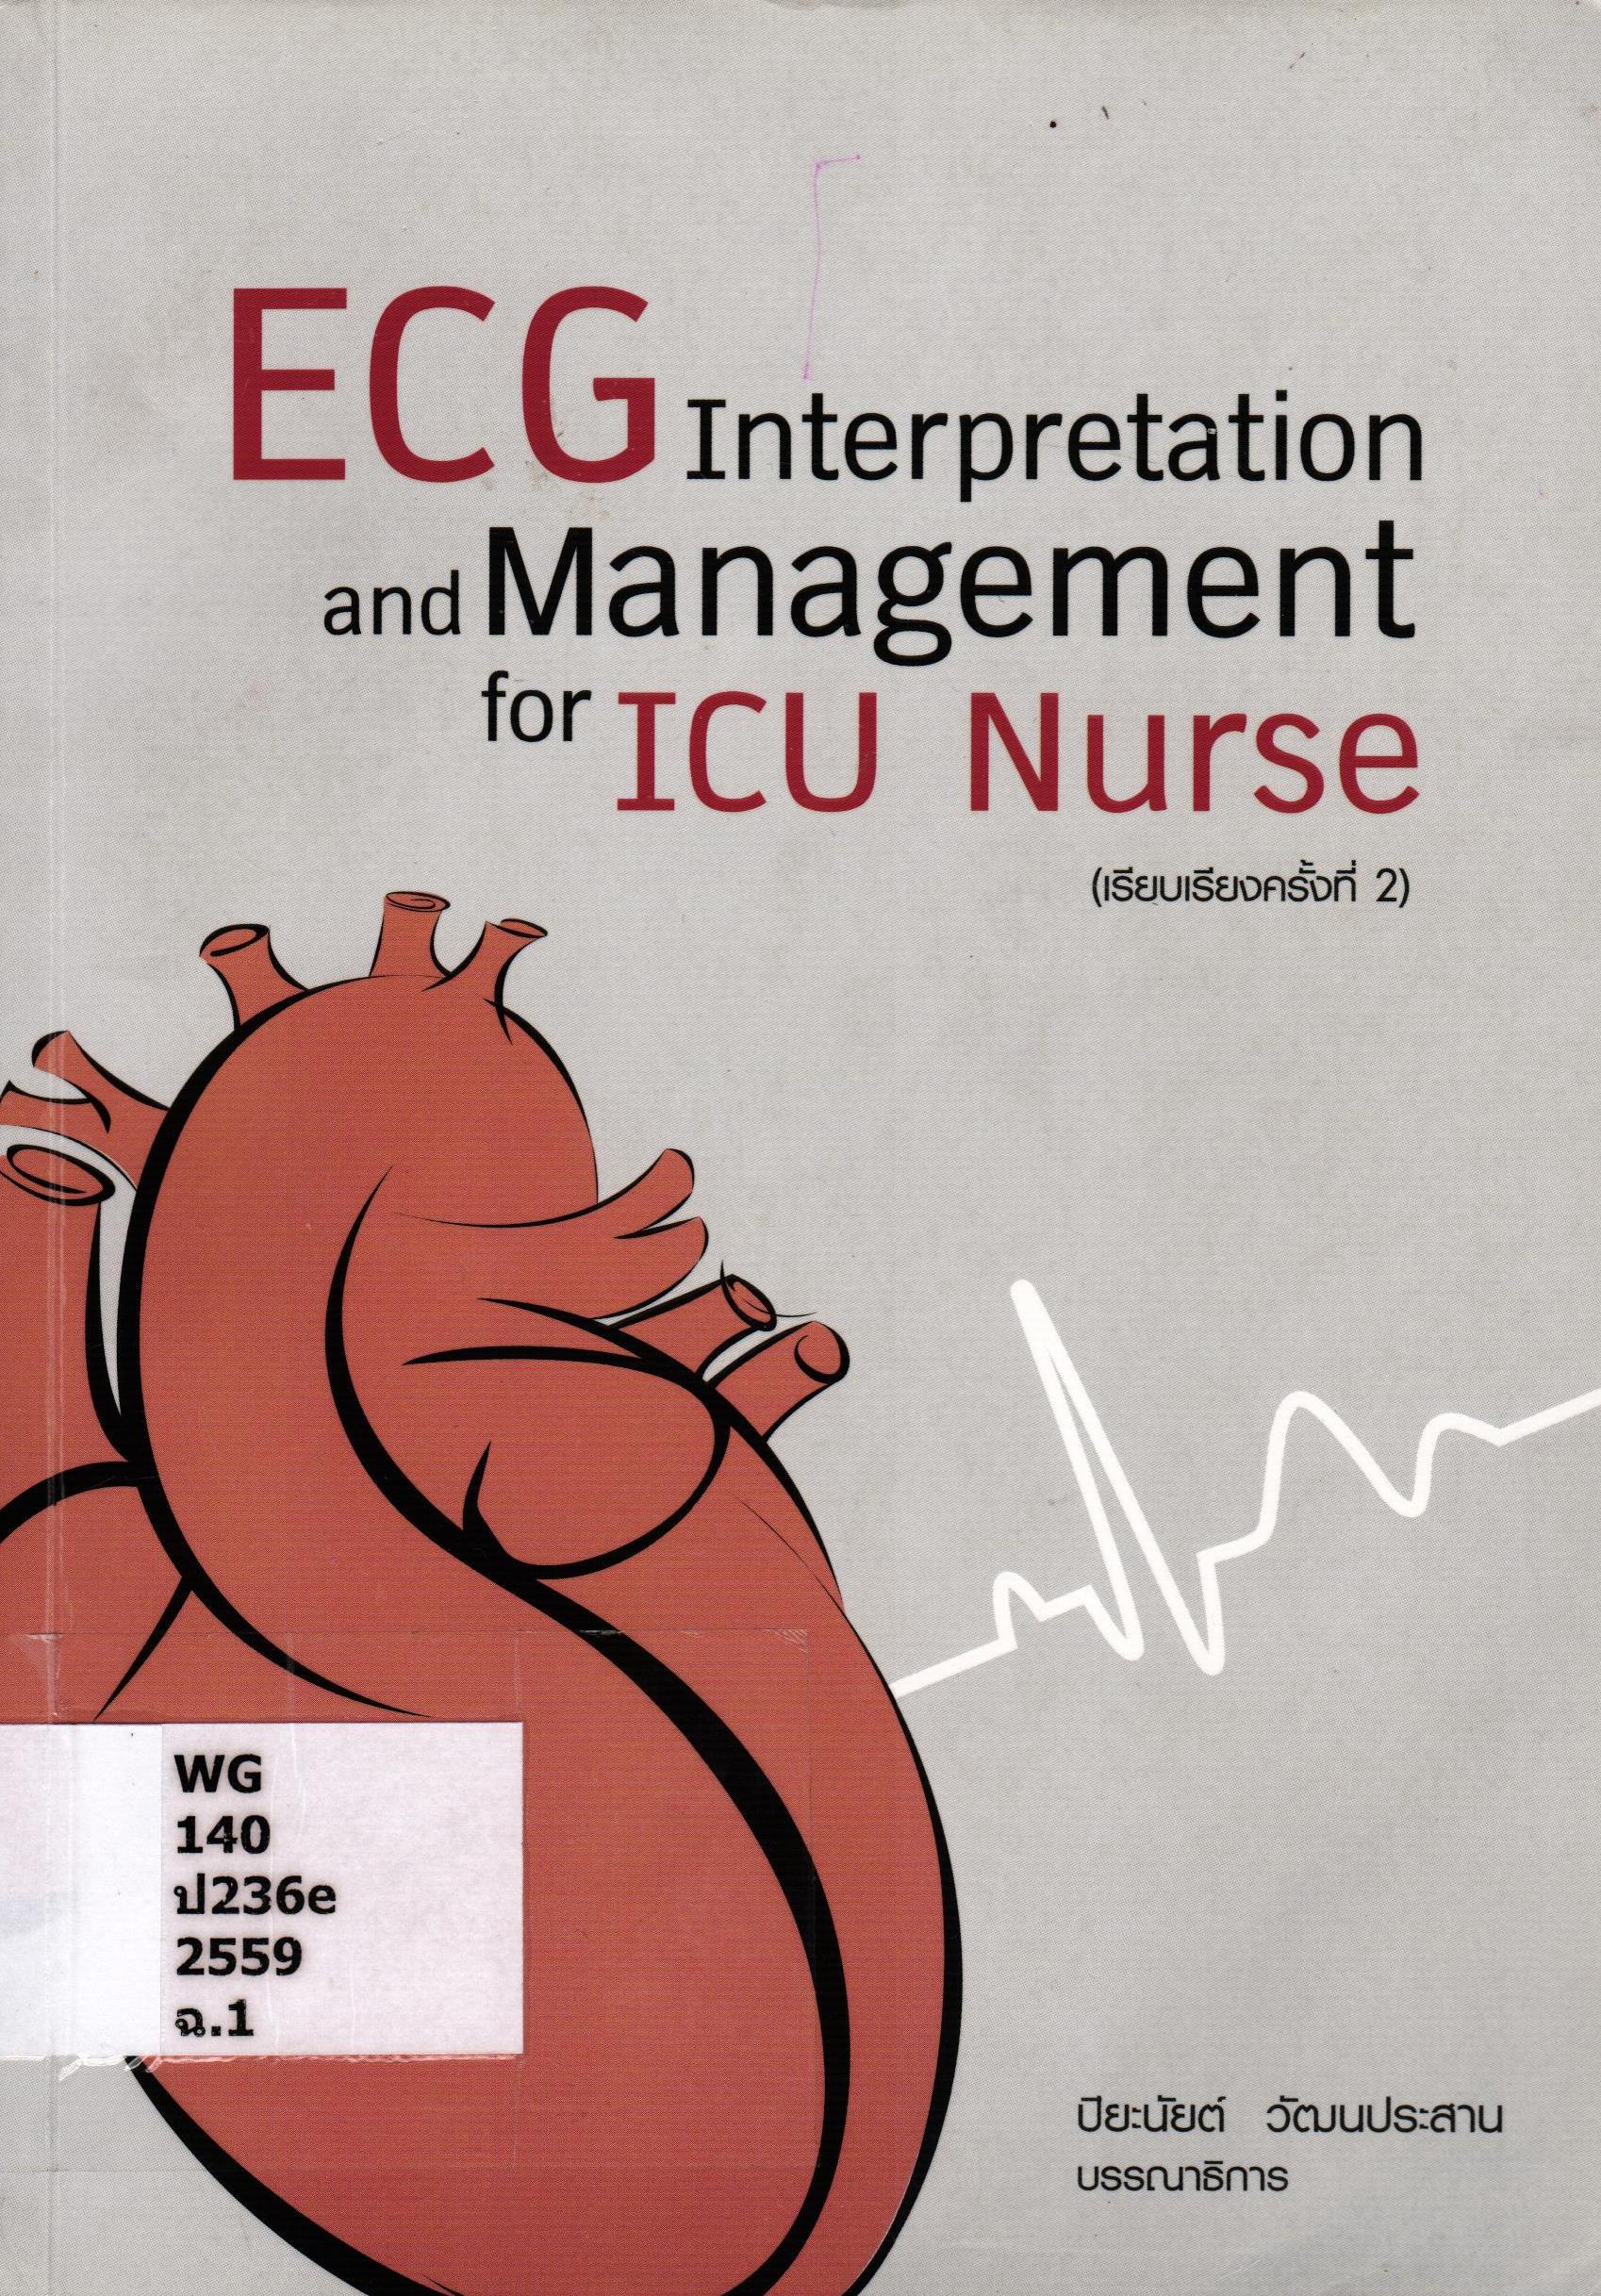 ECG interpretation and management for ICU nurse